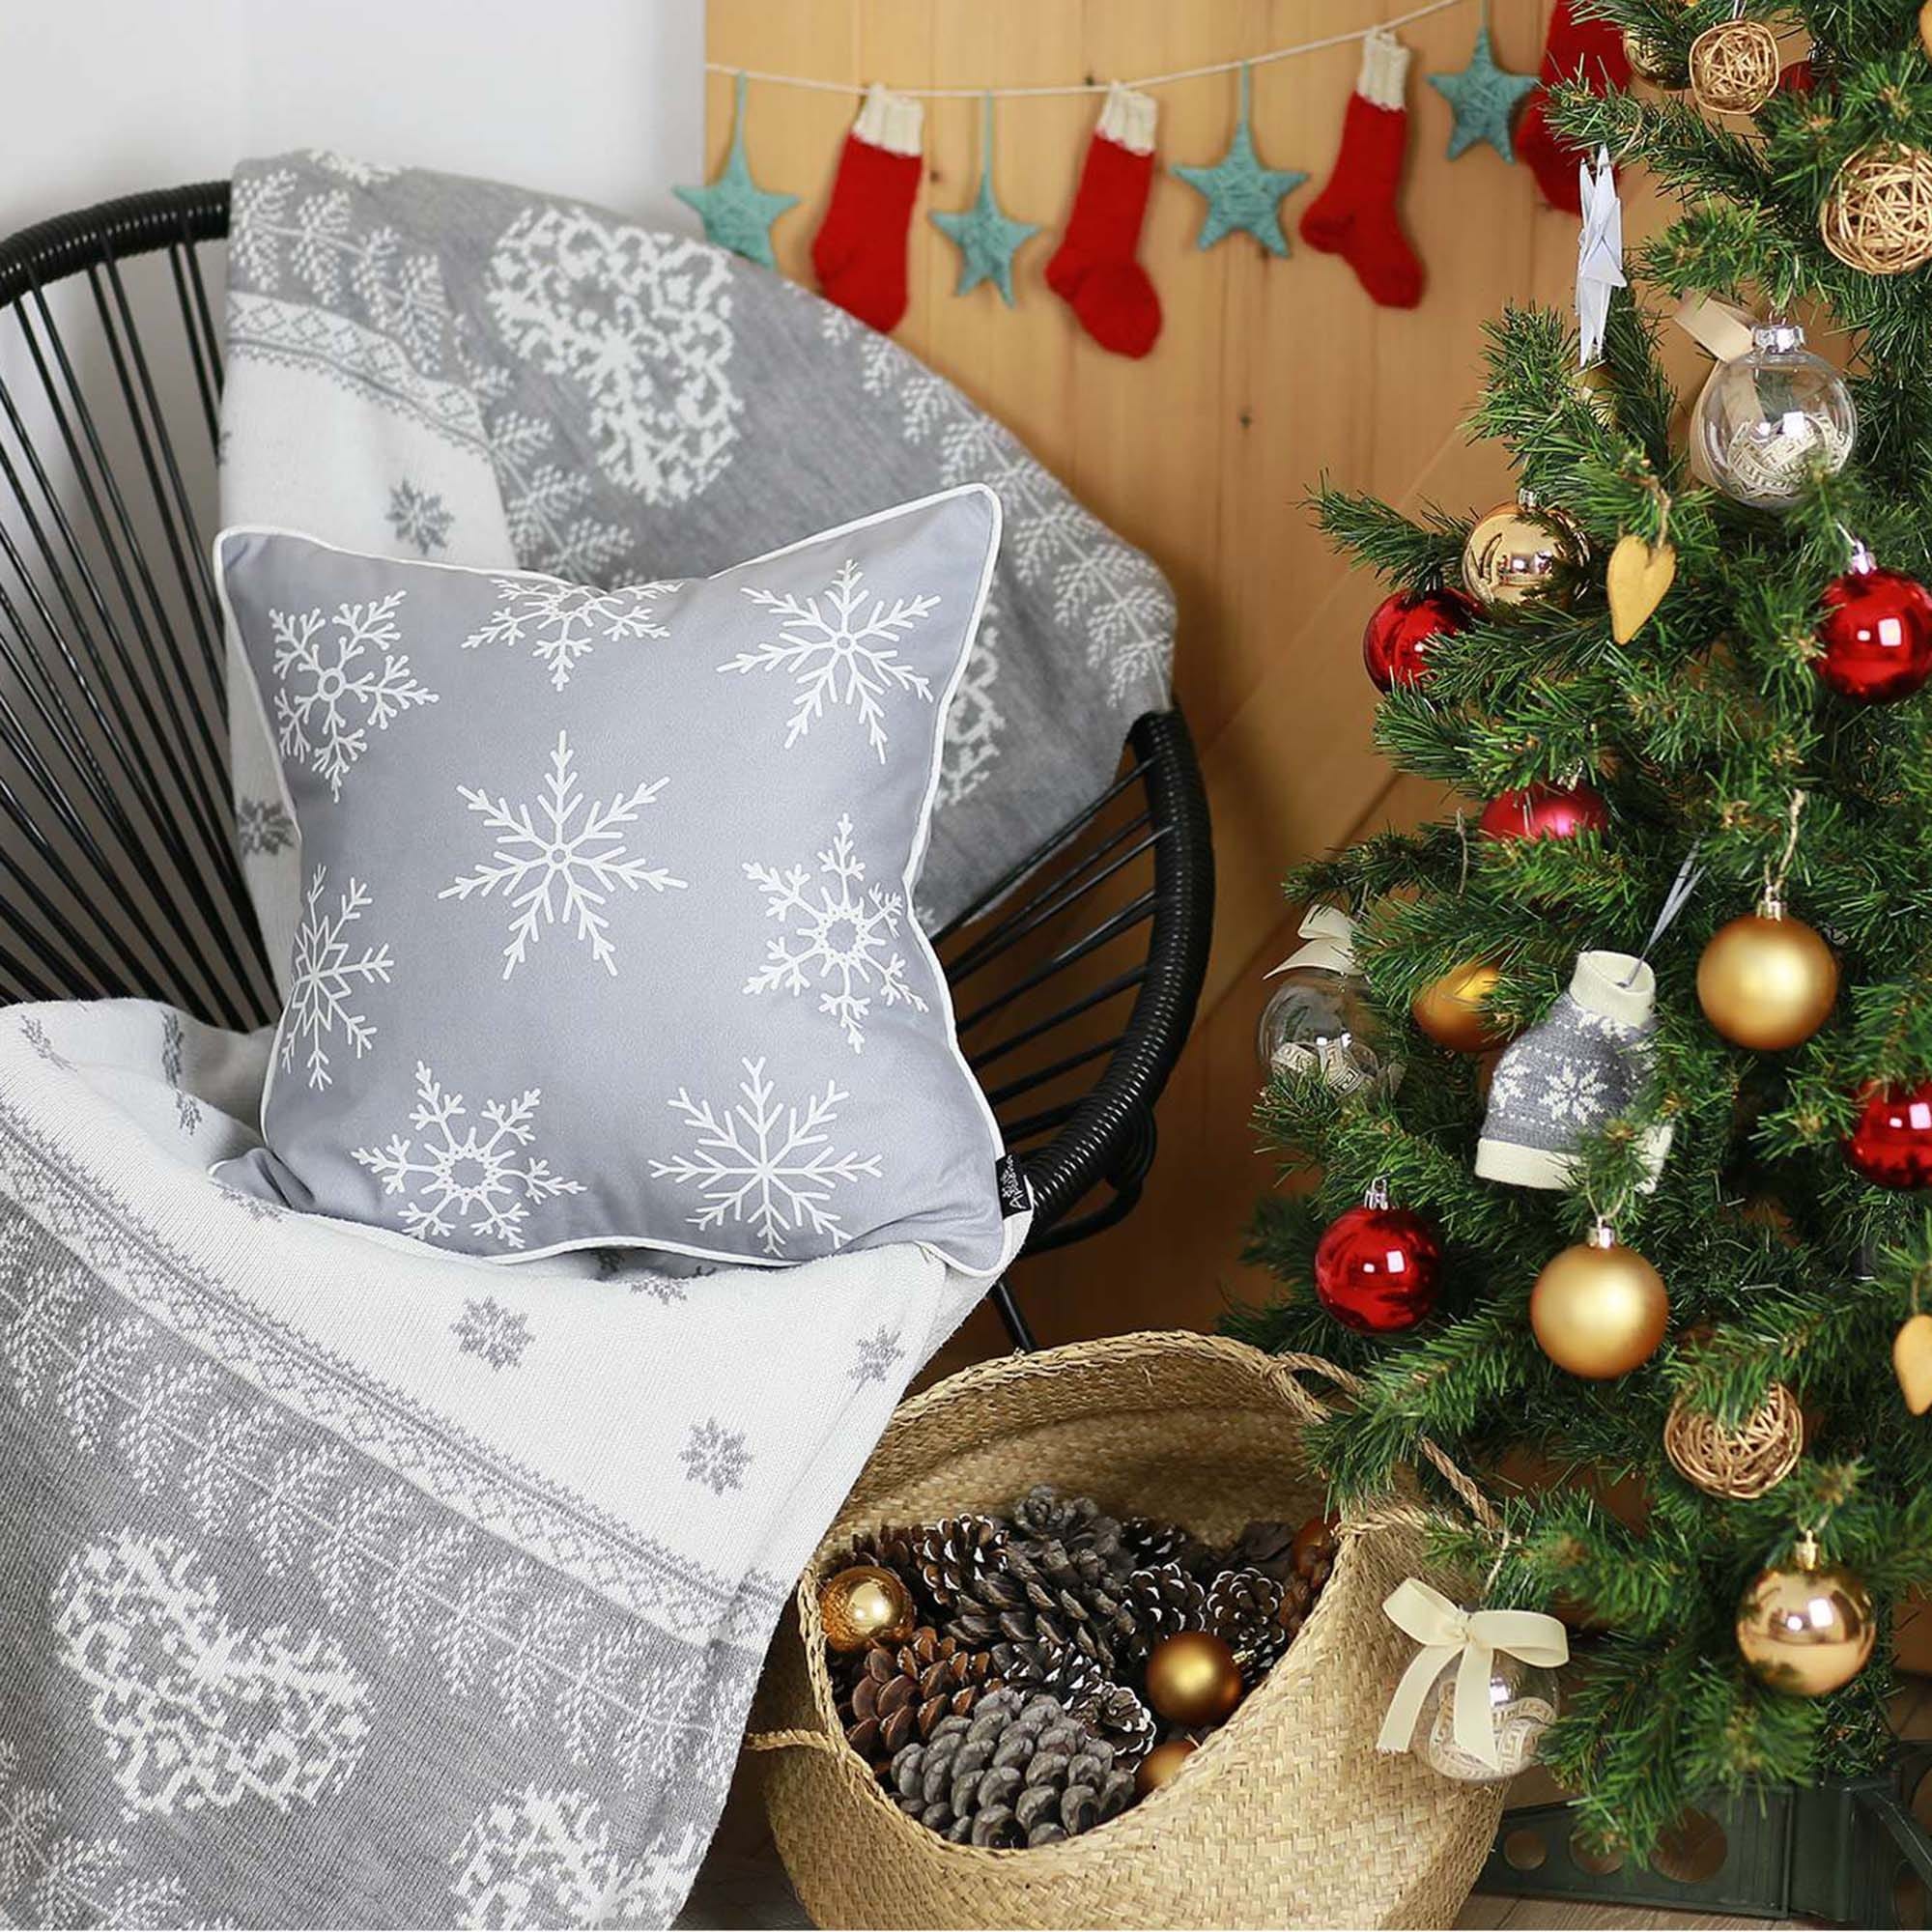 https://ak1.ostkcdn.com/images/products/is/images/direct/0b54b1307985f452e18e4b28edf0771f4e258cb3/Decorative-Christmas-Snowflakes-Single-Throw-Pillow-Cover-Square.jpg